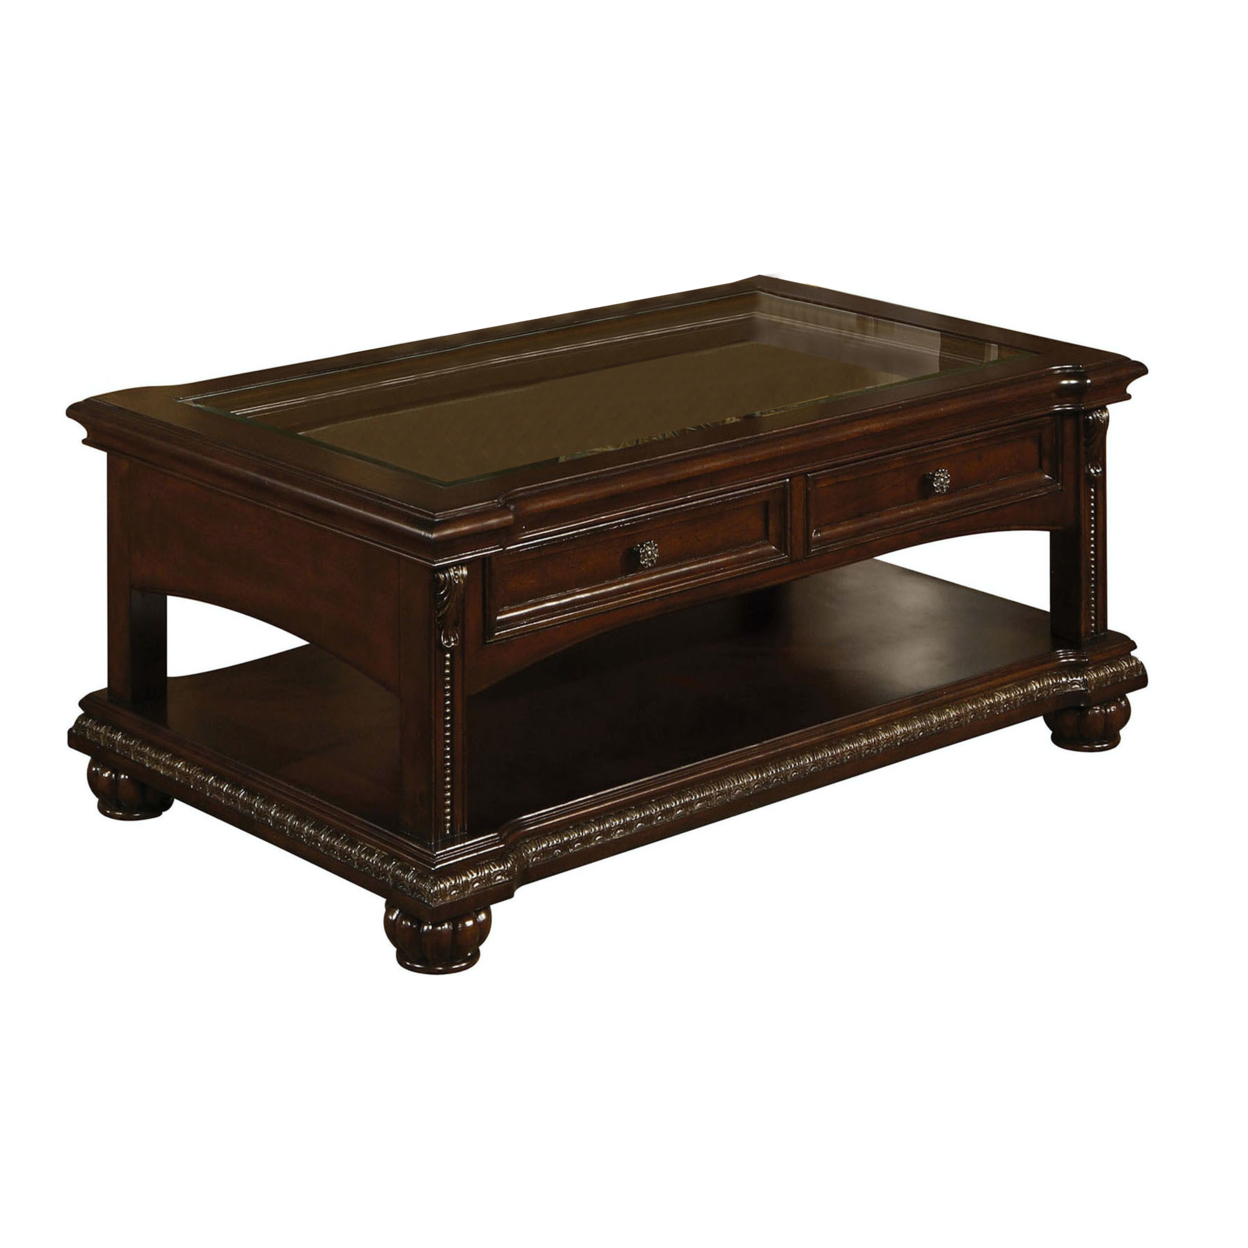 50 Inch Classic Wood Coffee Table, Glass Top, 2 Drawers, Dark Cherry Brown- Saltoro Sherpi